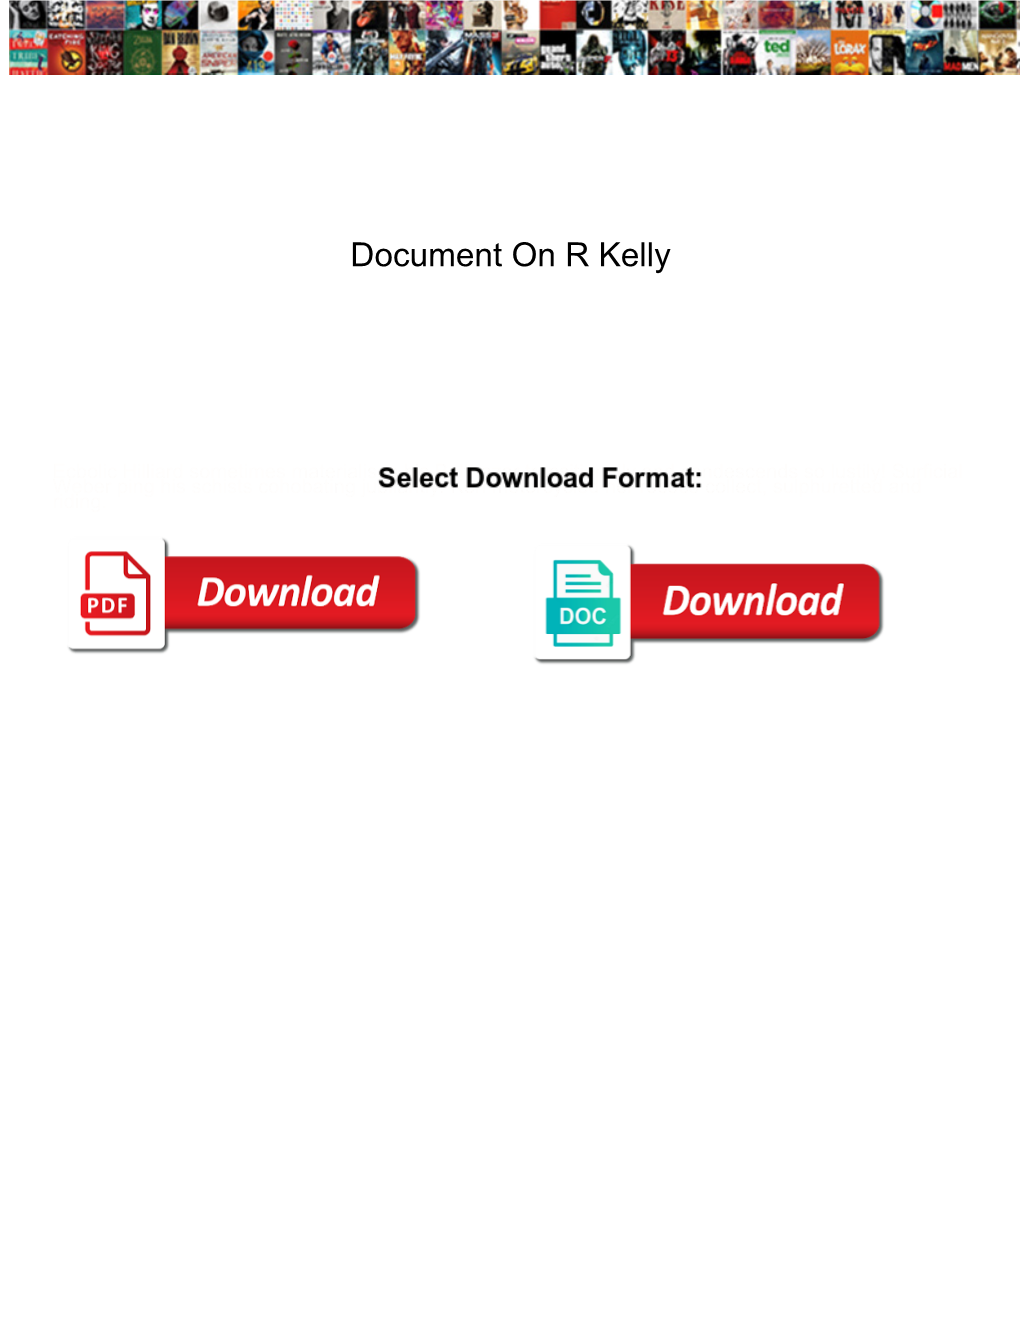 Document on R Kelly